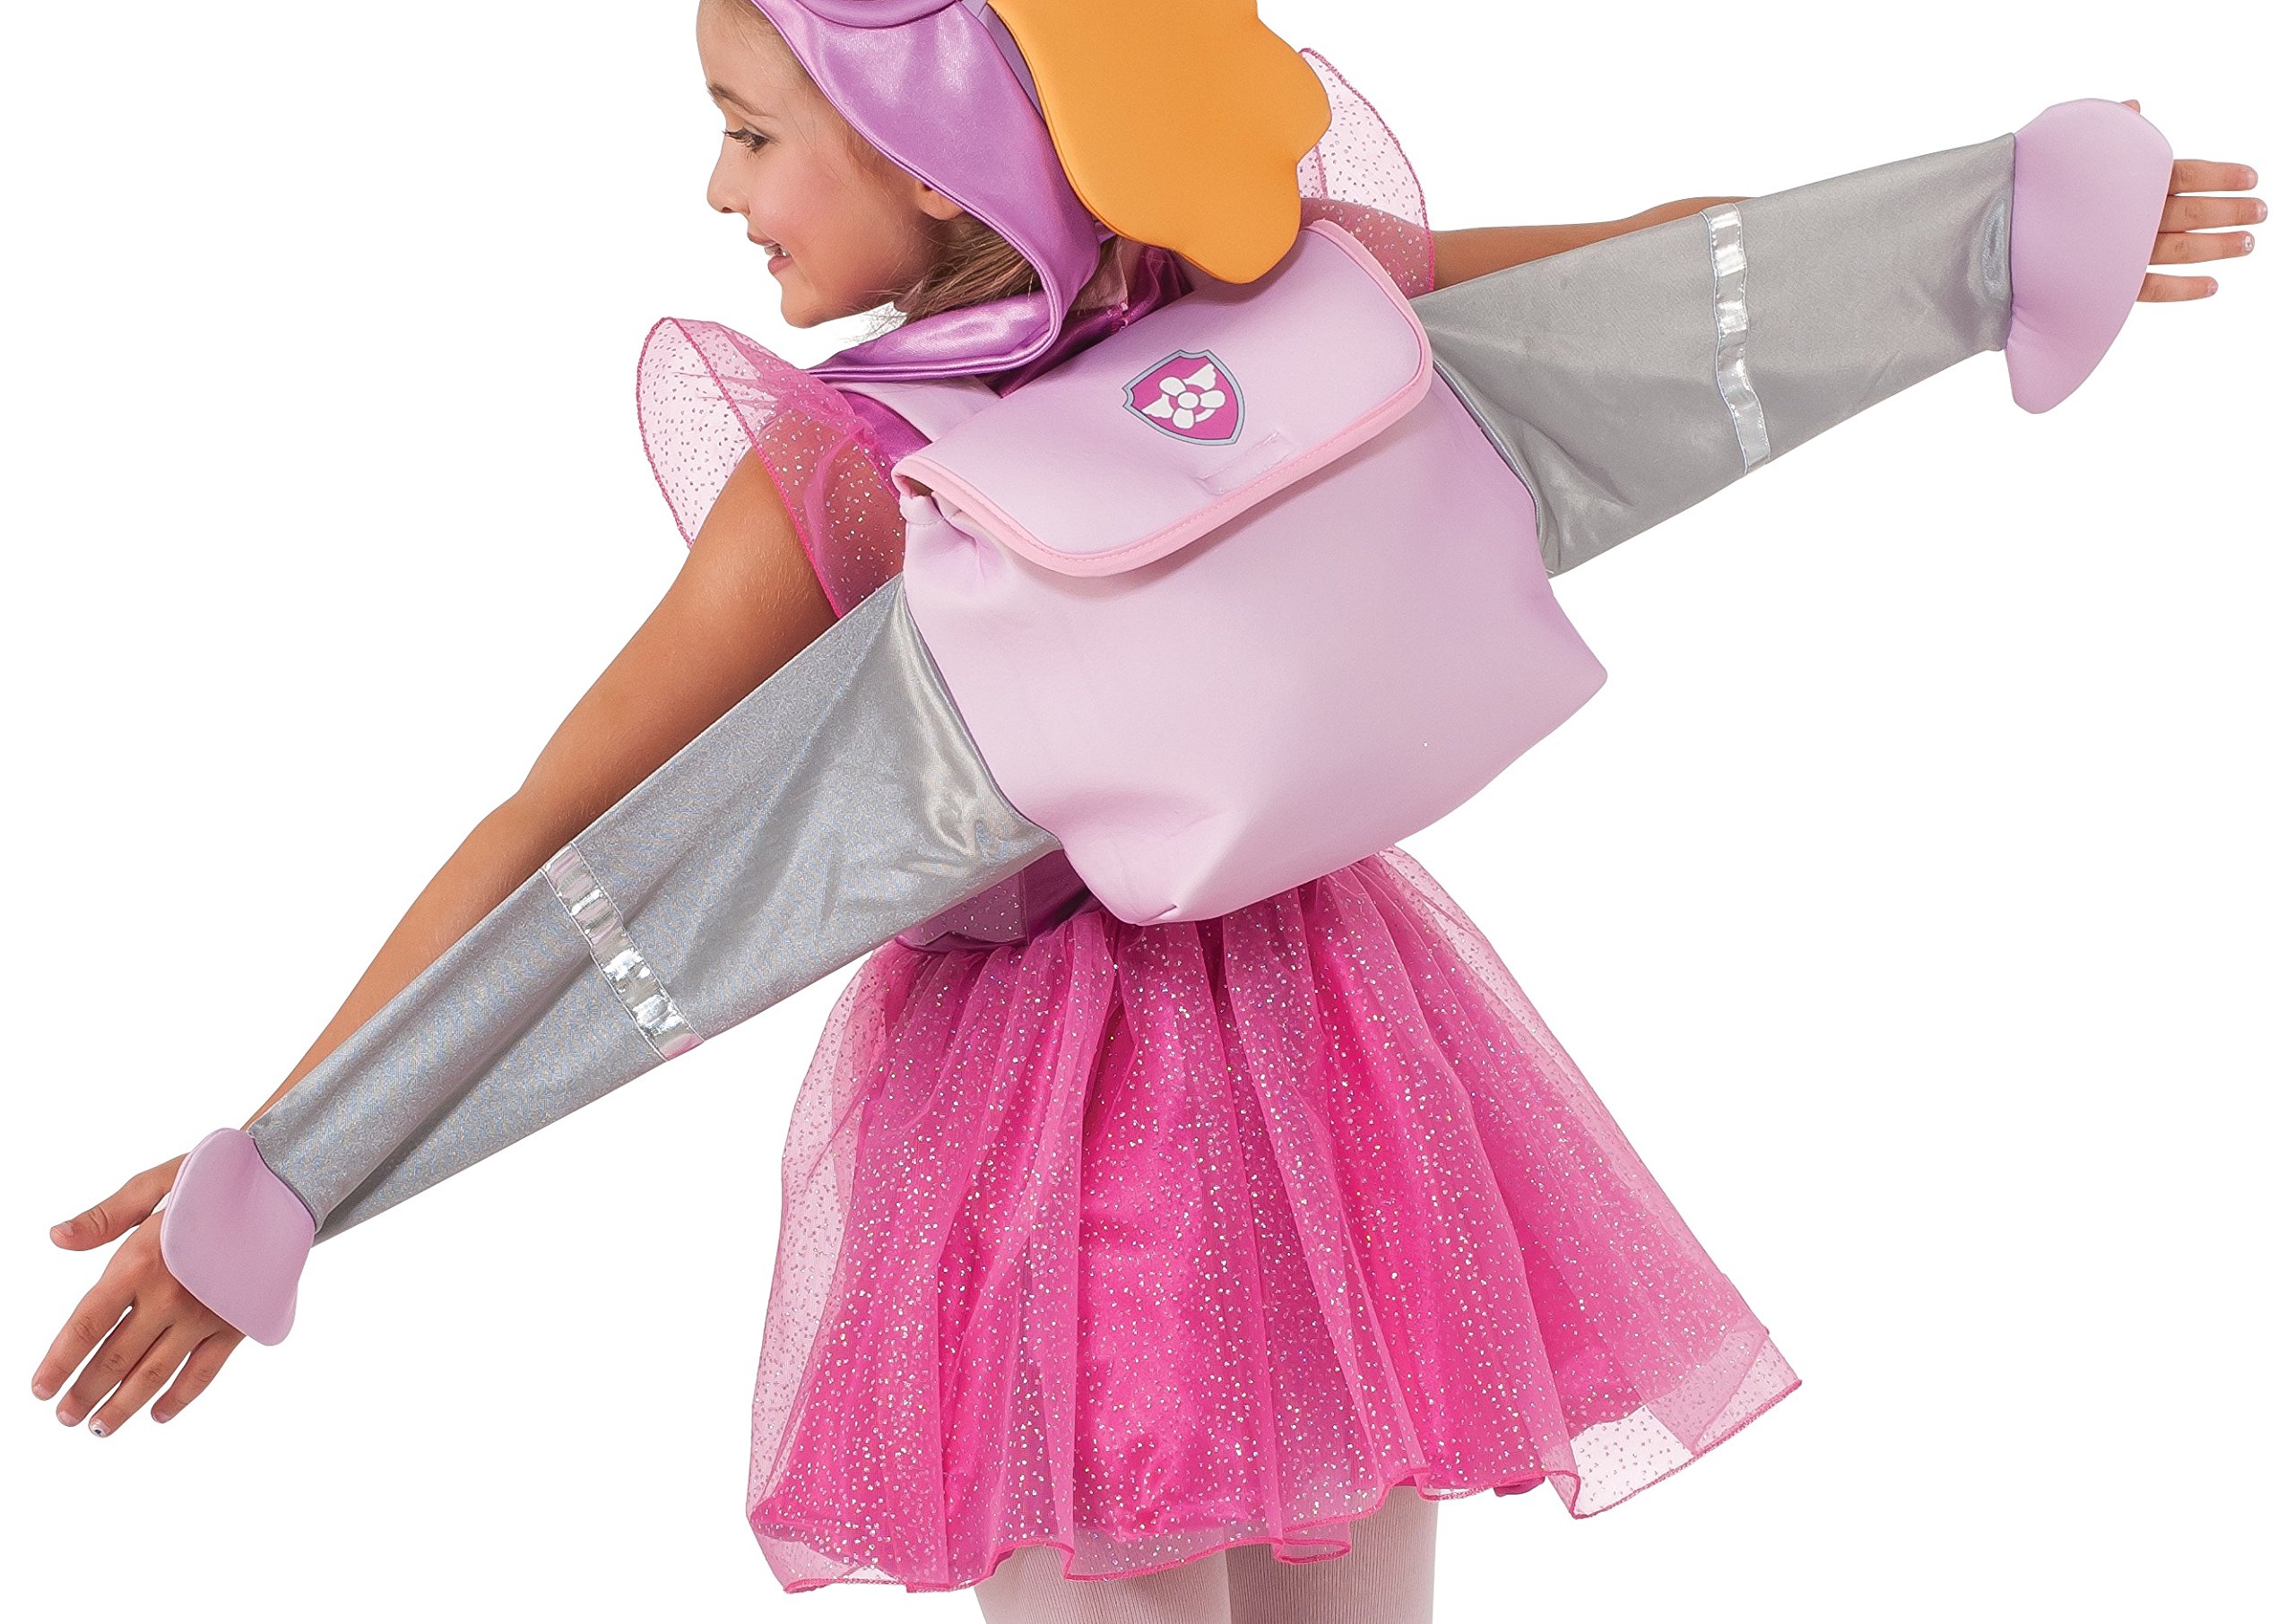 Rubie's Paw Patrol Skye Child Costume, Small, Pink